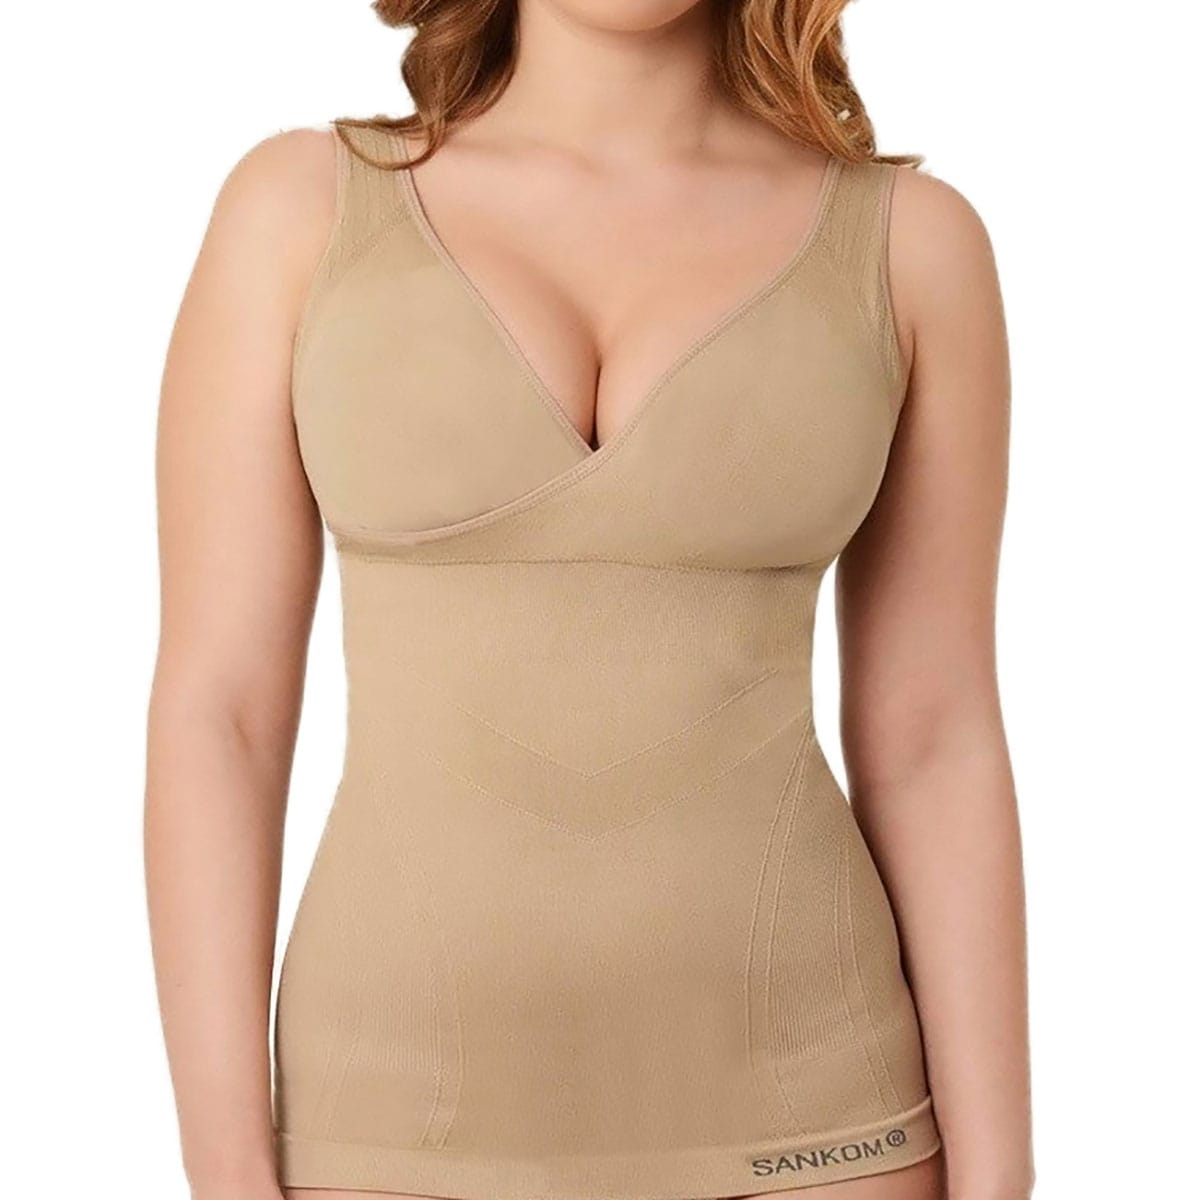 SANKOM-Beige Slimming Posture Vest Shaper Bra Essentials Classic-XXXL -  XXXL - Bed Bath & Beyond - 34038366